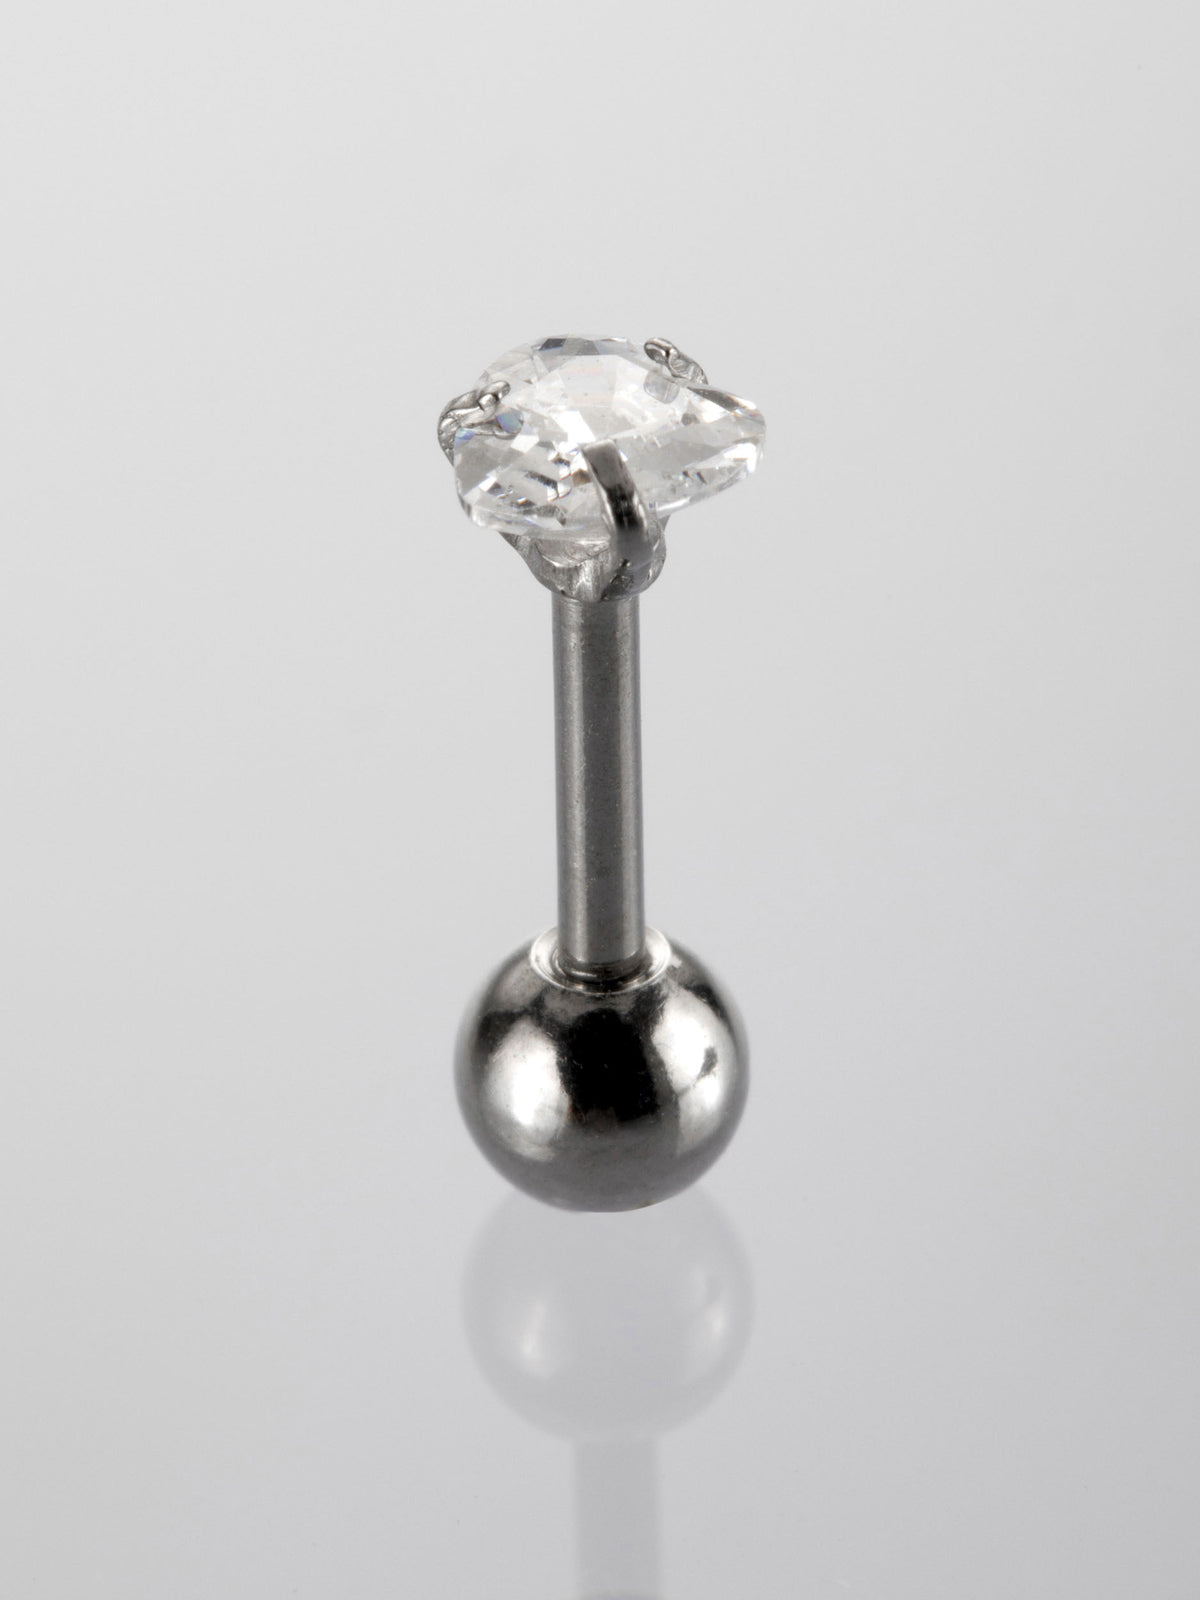 Činka piercing do ucha s čirým krystalem ve tvaru srdce z chirurgické oceli VB0032-07